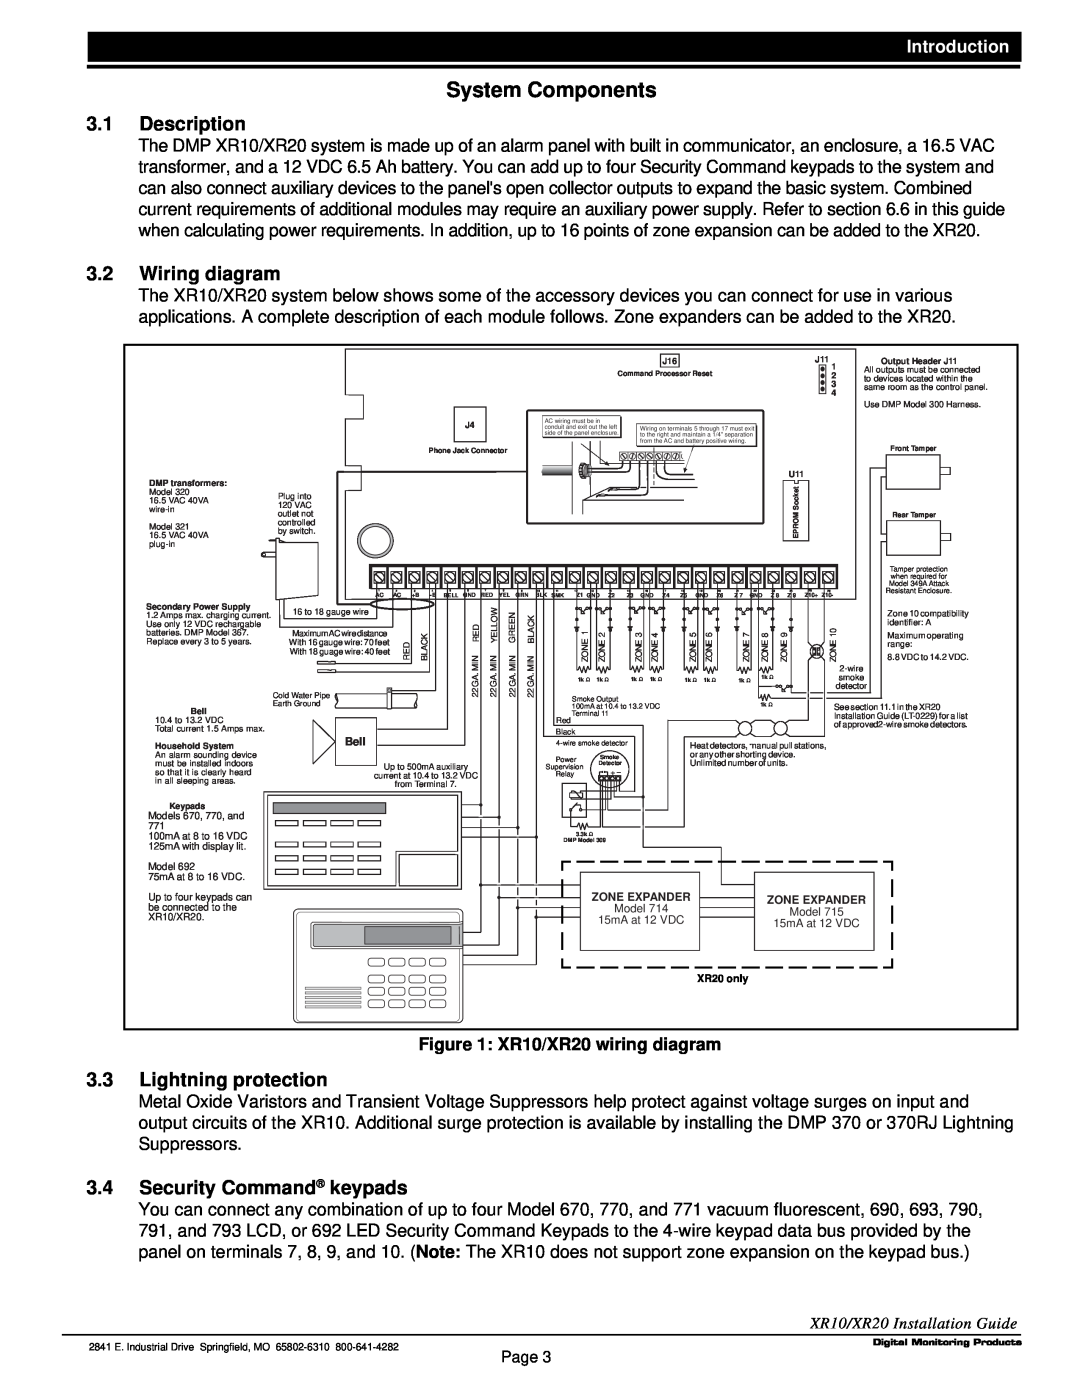 DMP Electronics LT-0229 (5 97) System Components, 3.1Description, 3.2Wiring diagram, 3.3Lightning protection, Introduction 